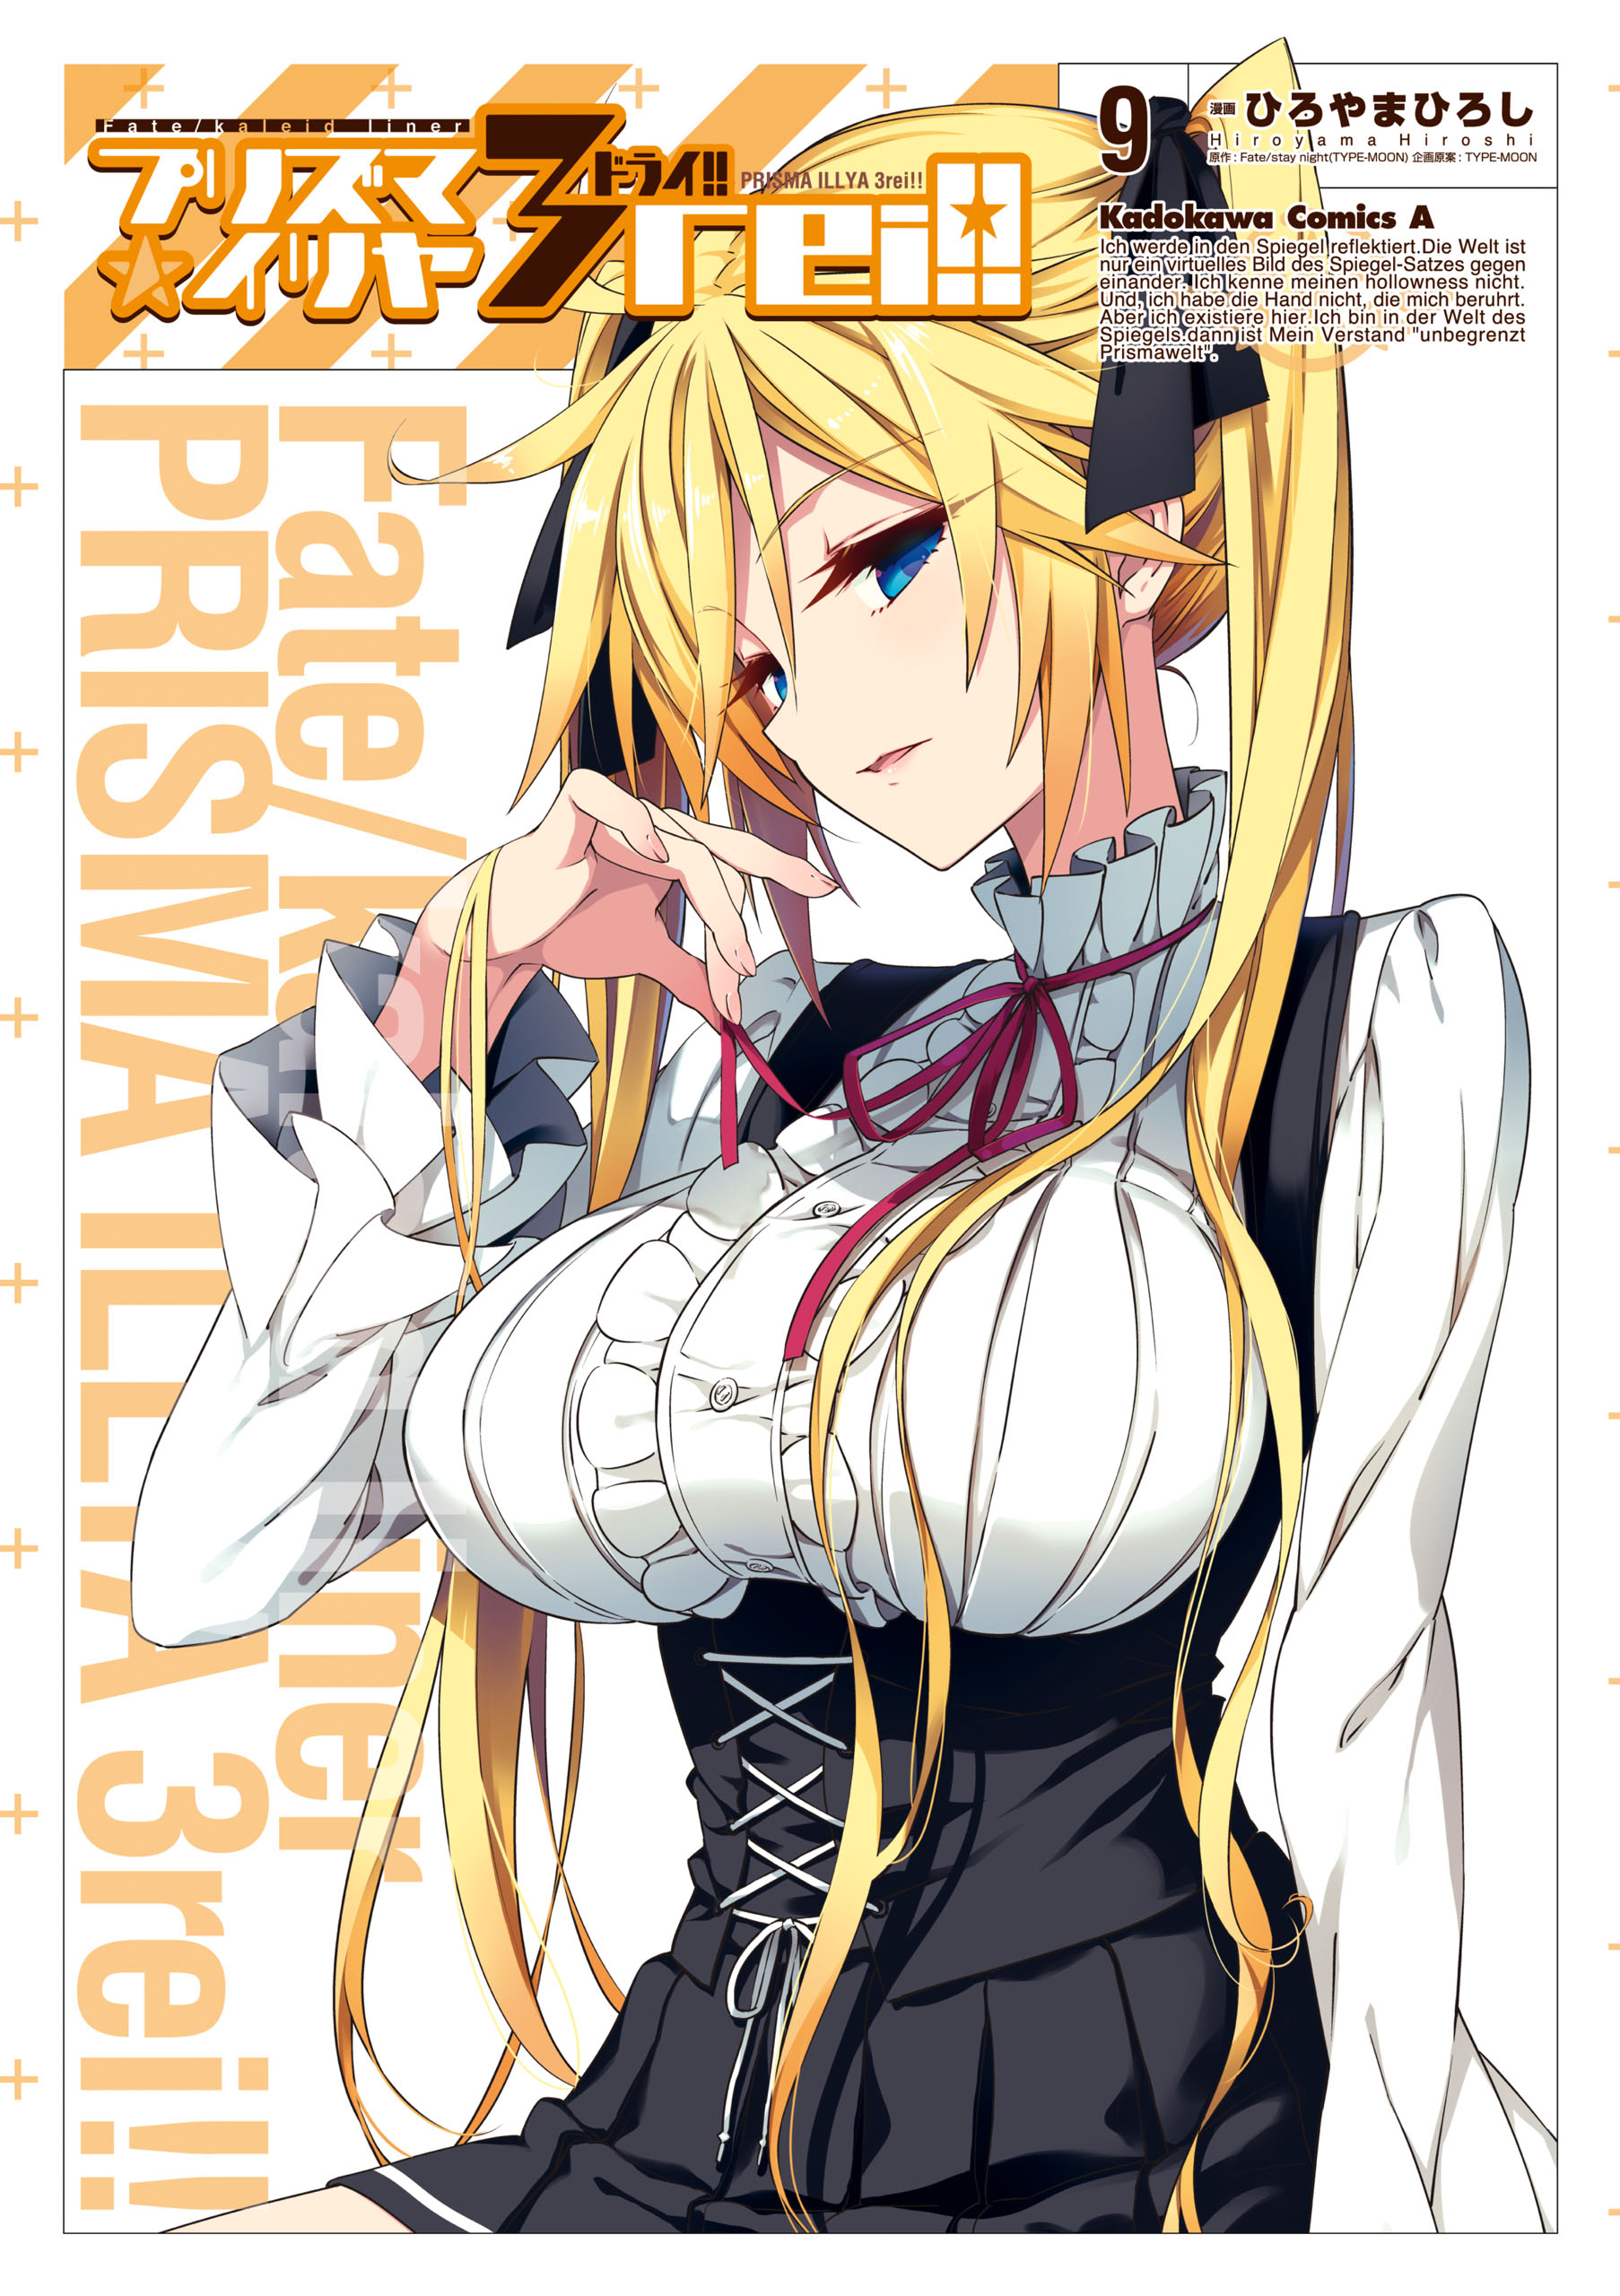 Doujinshi - Fate/kaleid liner Prisma Illya / Illya & Archer & Senji Muramasa  (カルデアデミカゾク４) / 桜月(サクラヅキ)